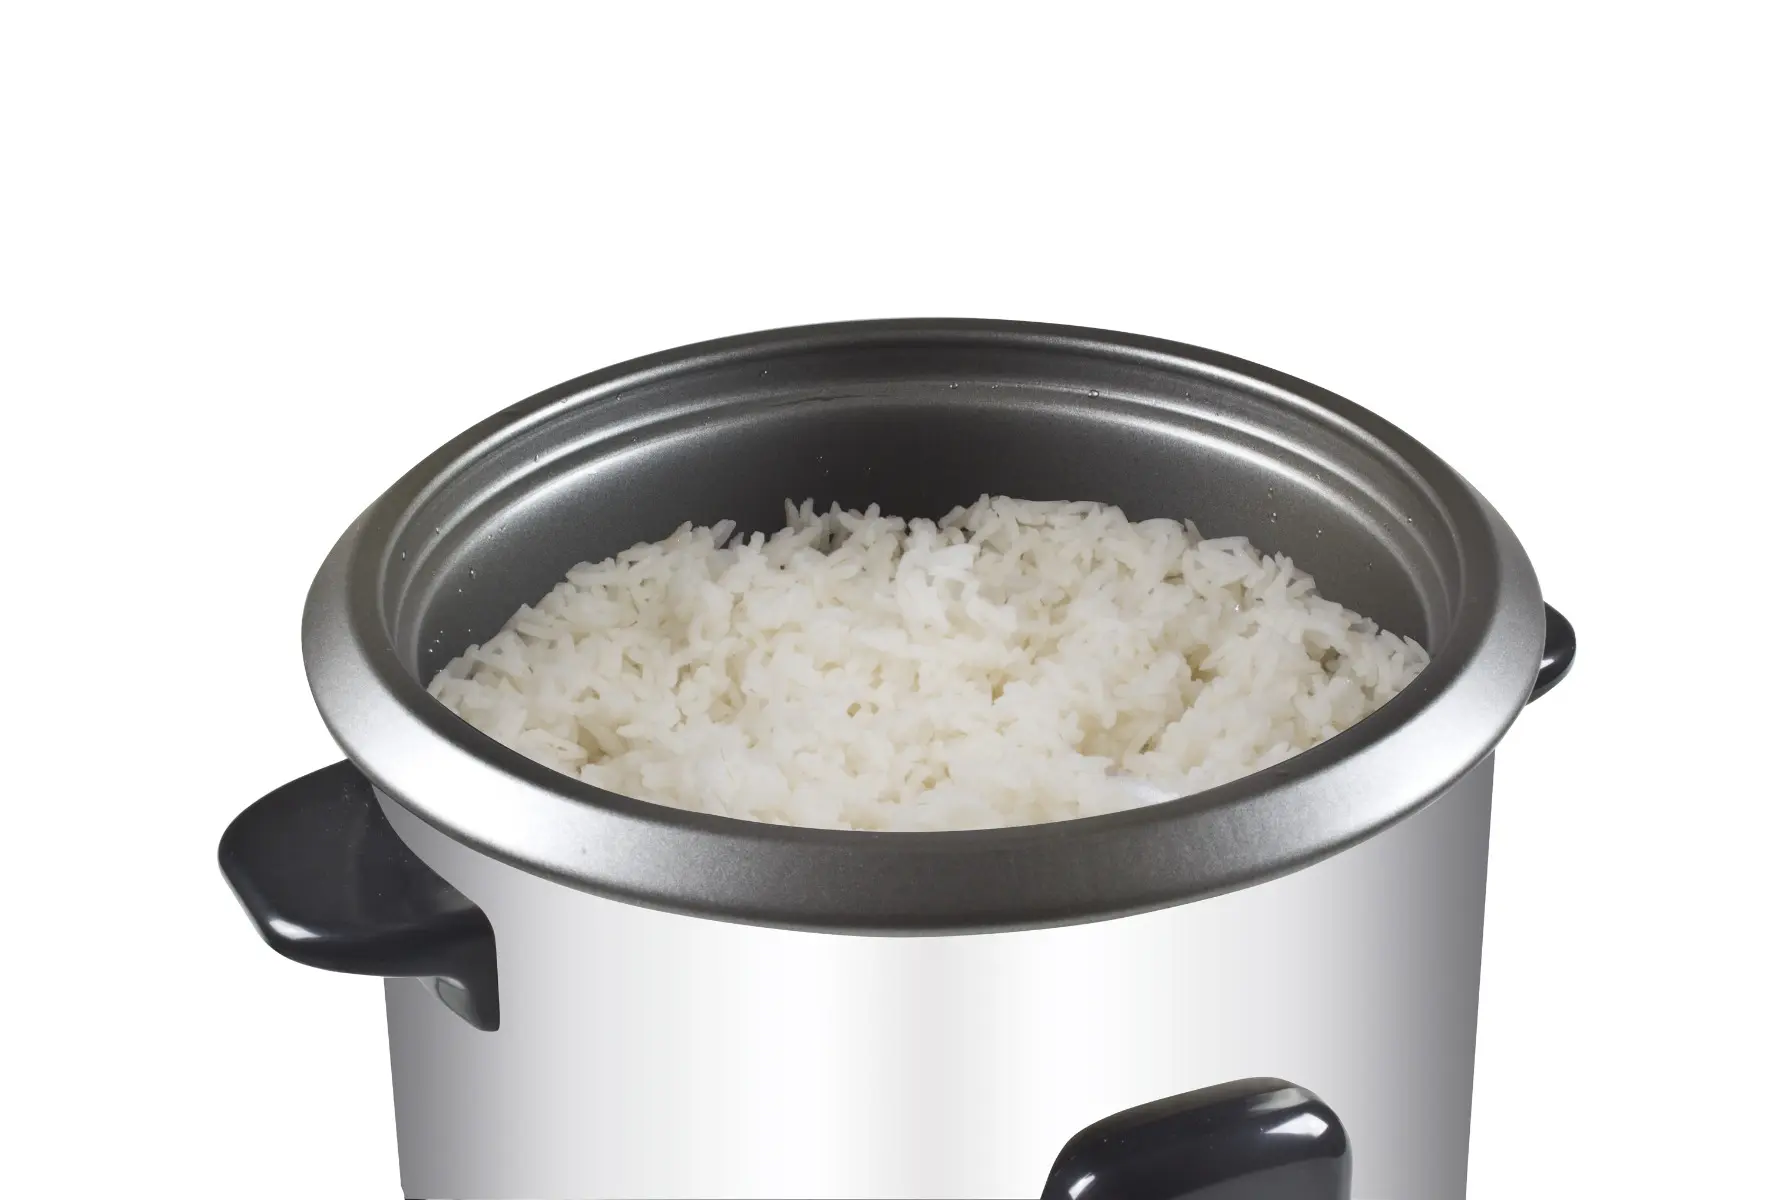 Fierbator de orez si aparat de gatit cu aburi 2 in 1, Beper 90.550, 1 litru, 400 W, Inox / Negru